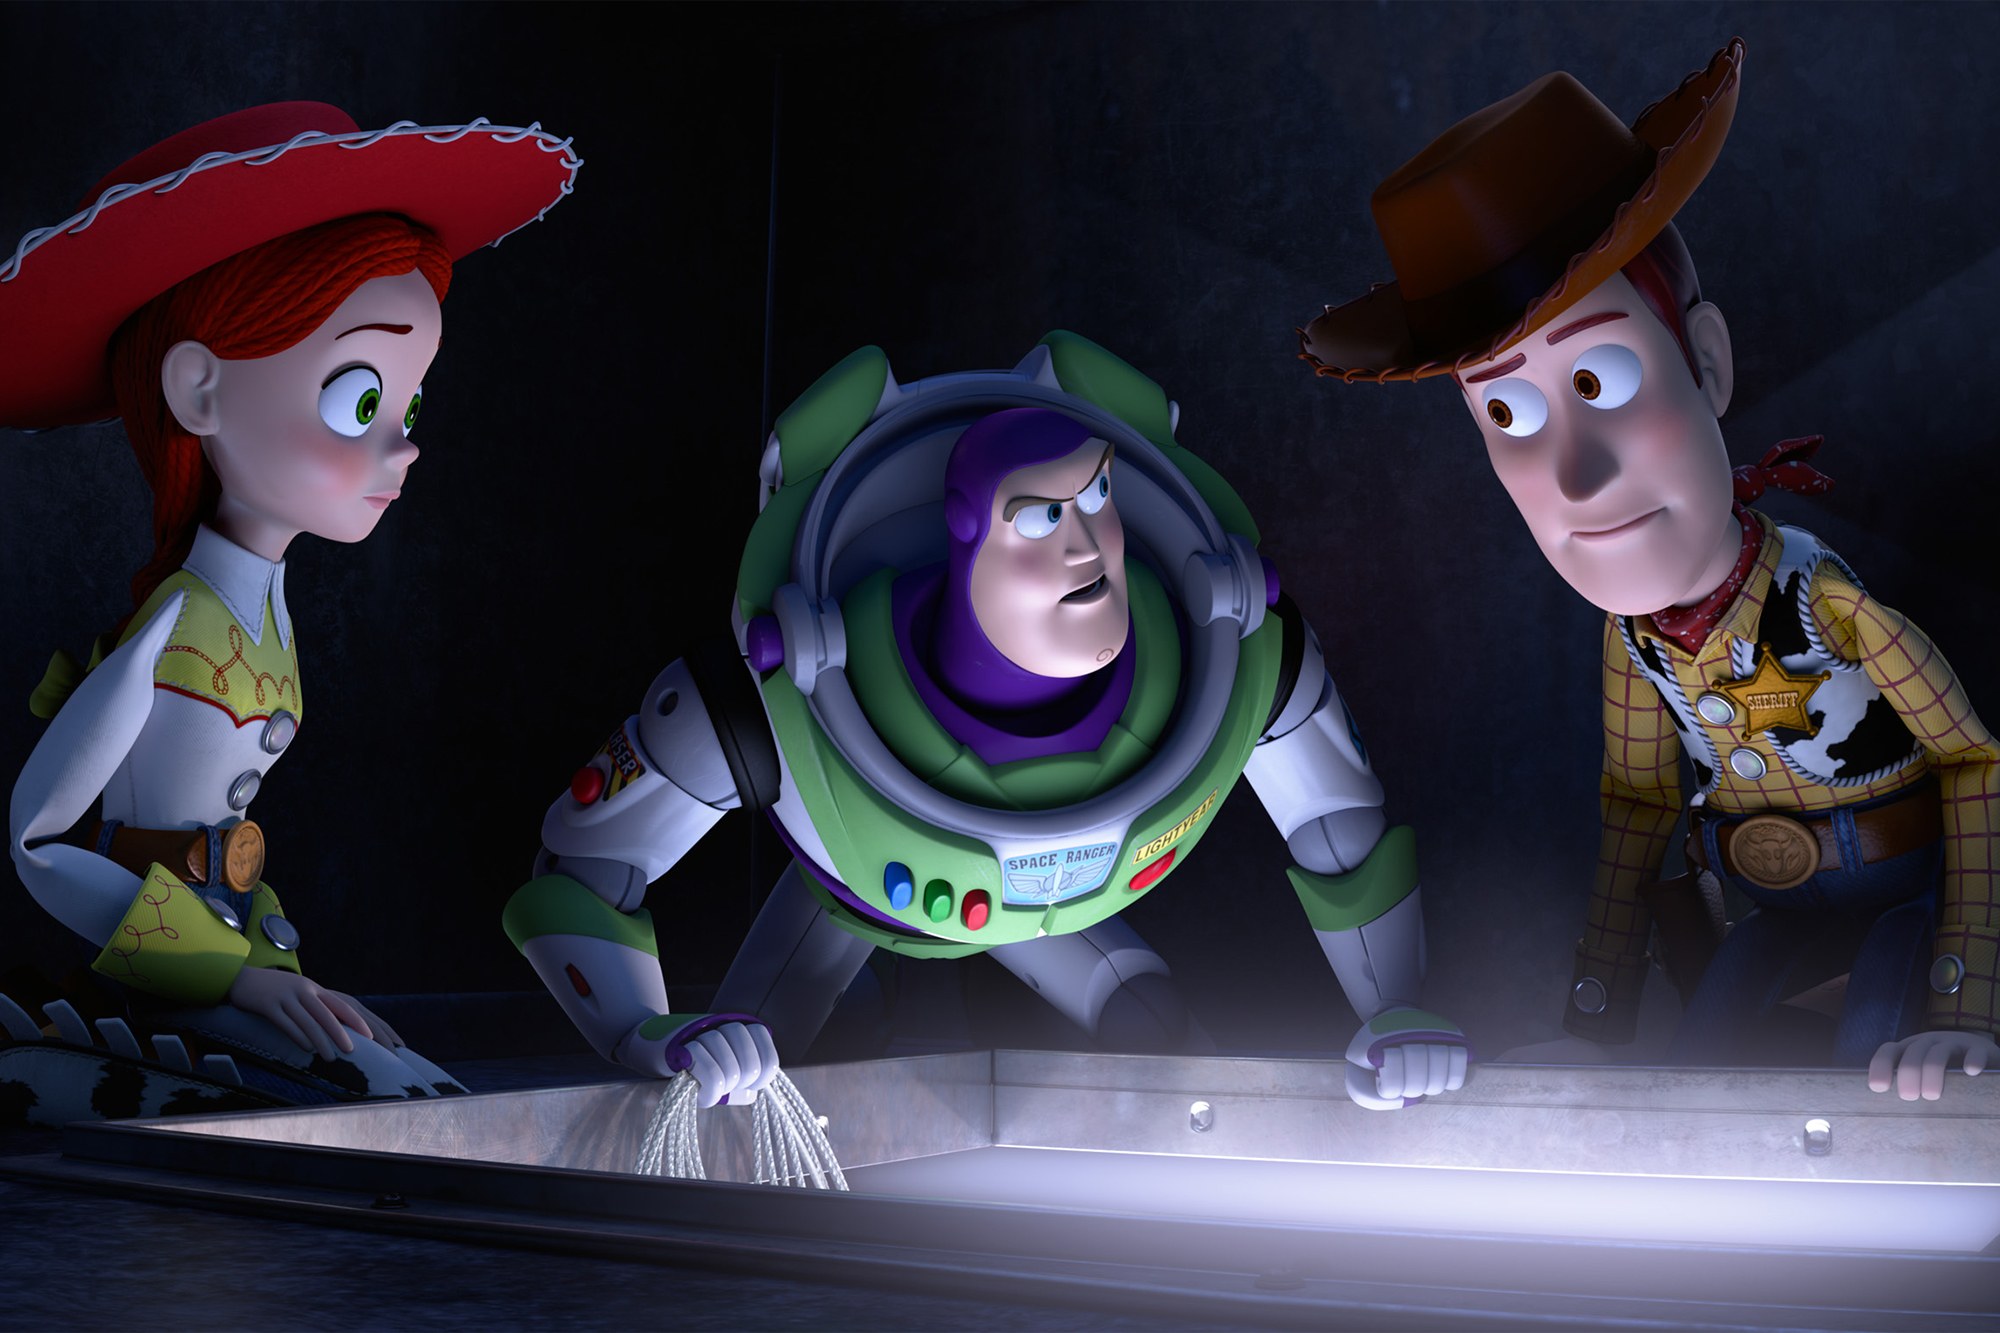  Toy Story 2 : Tom Hanks, Tim Allen, Joan Cusack